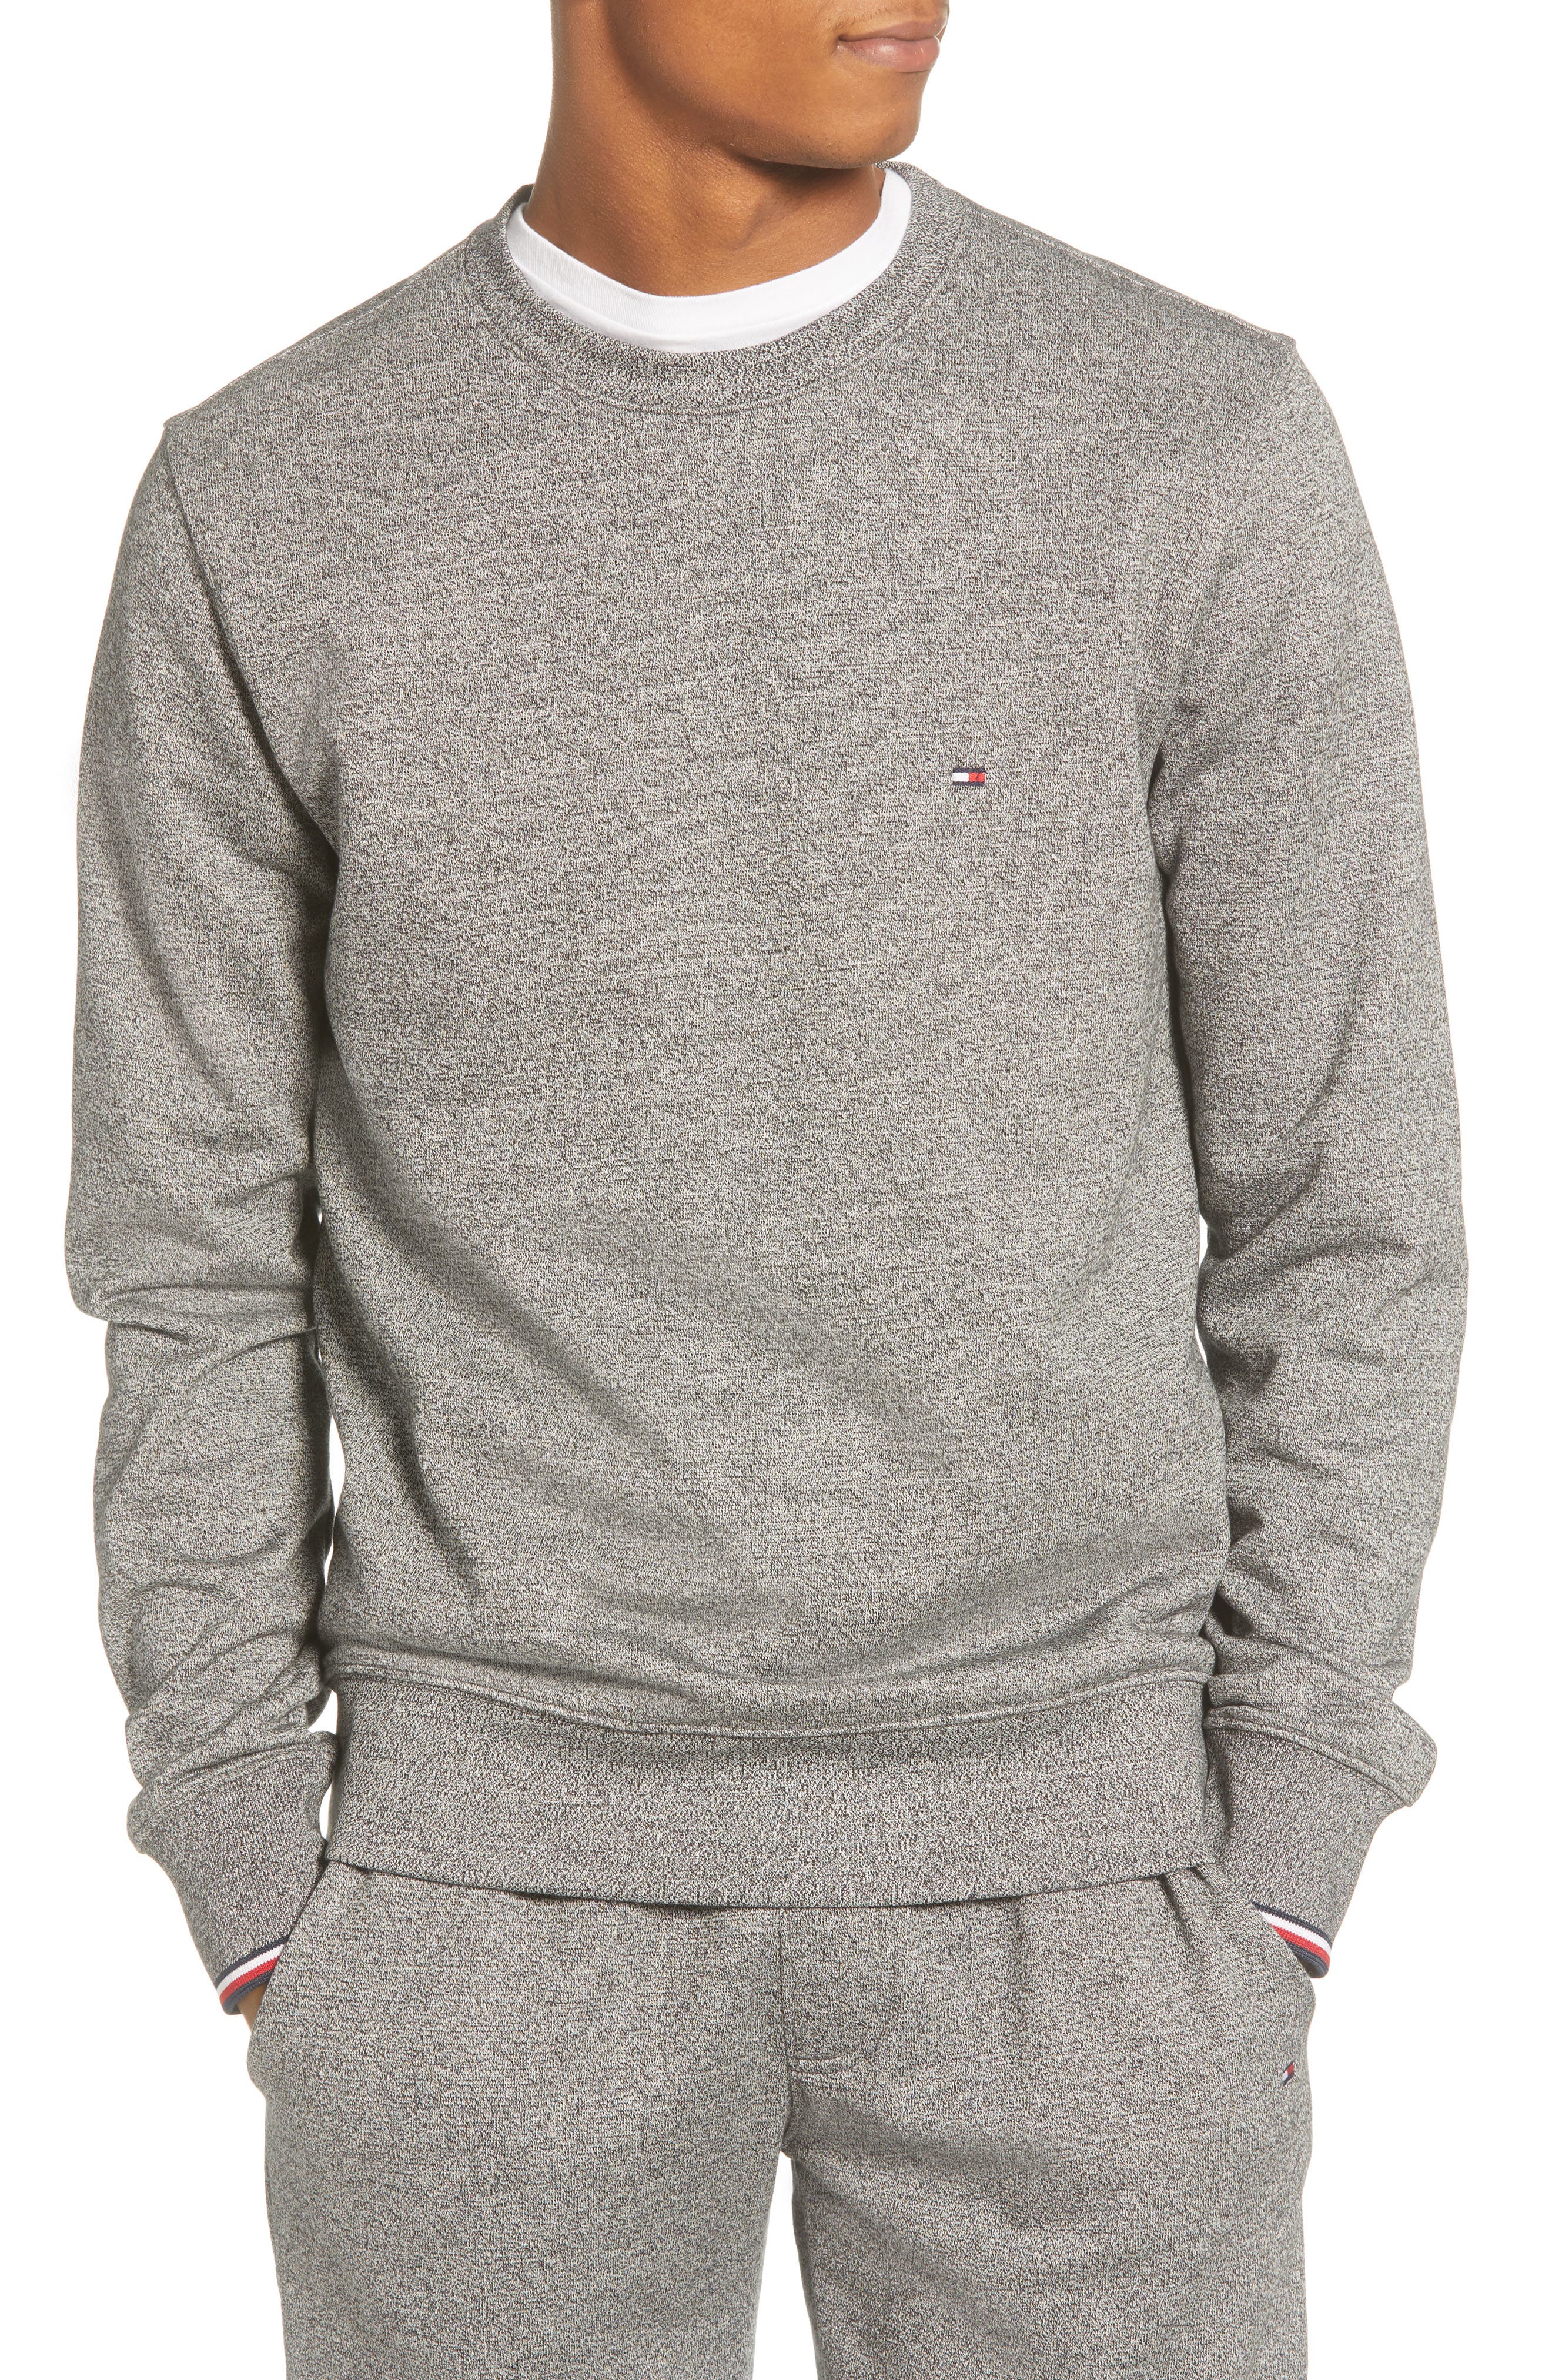 gray tommy hilfiger sweatshirt